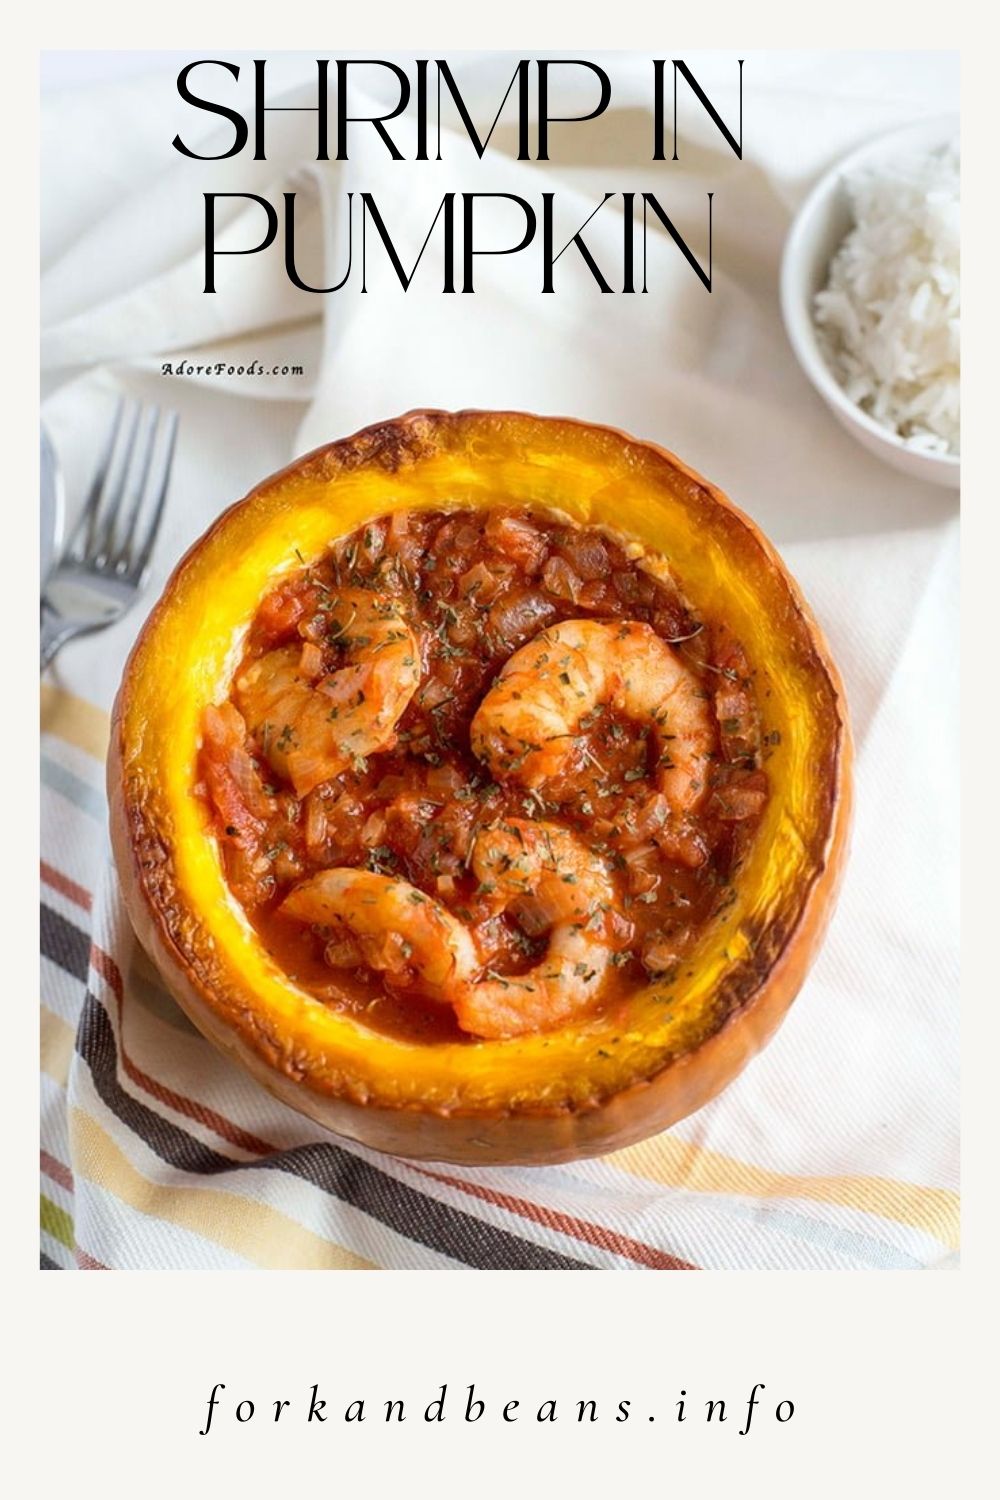 Camaro na Moranga, a pumpkin filled with shrimp from Brazil